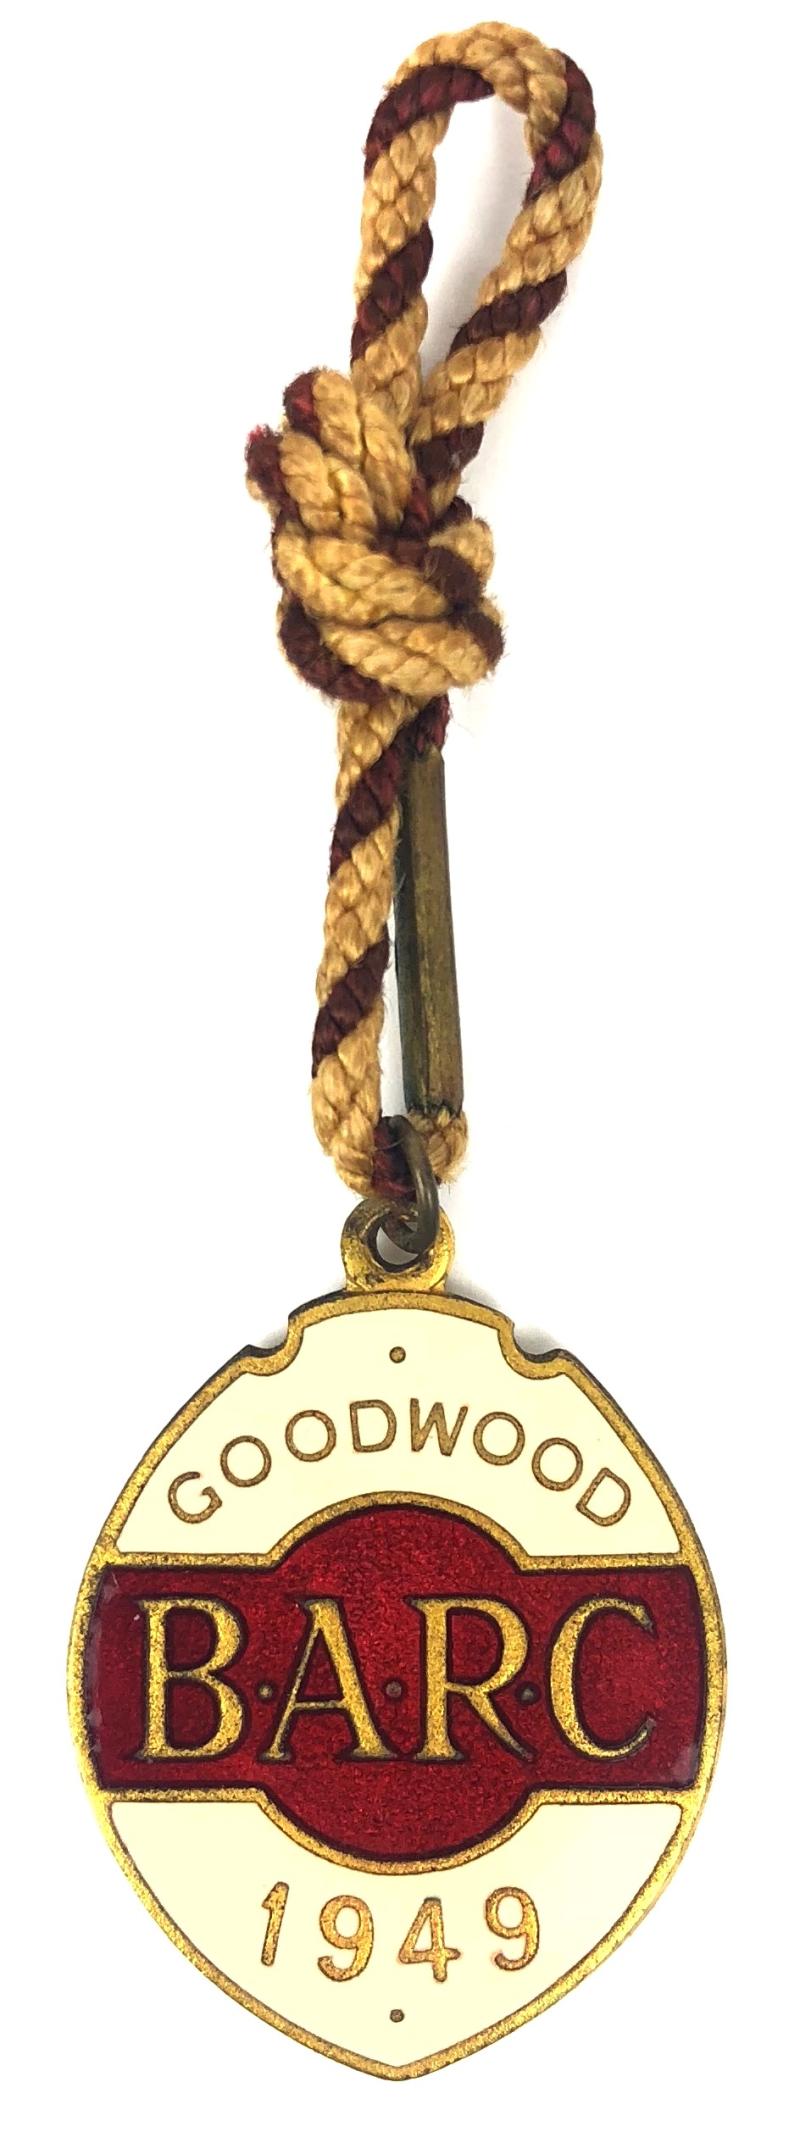 1949 Goodwood BARC membership badge